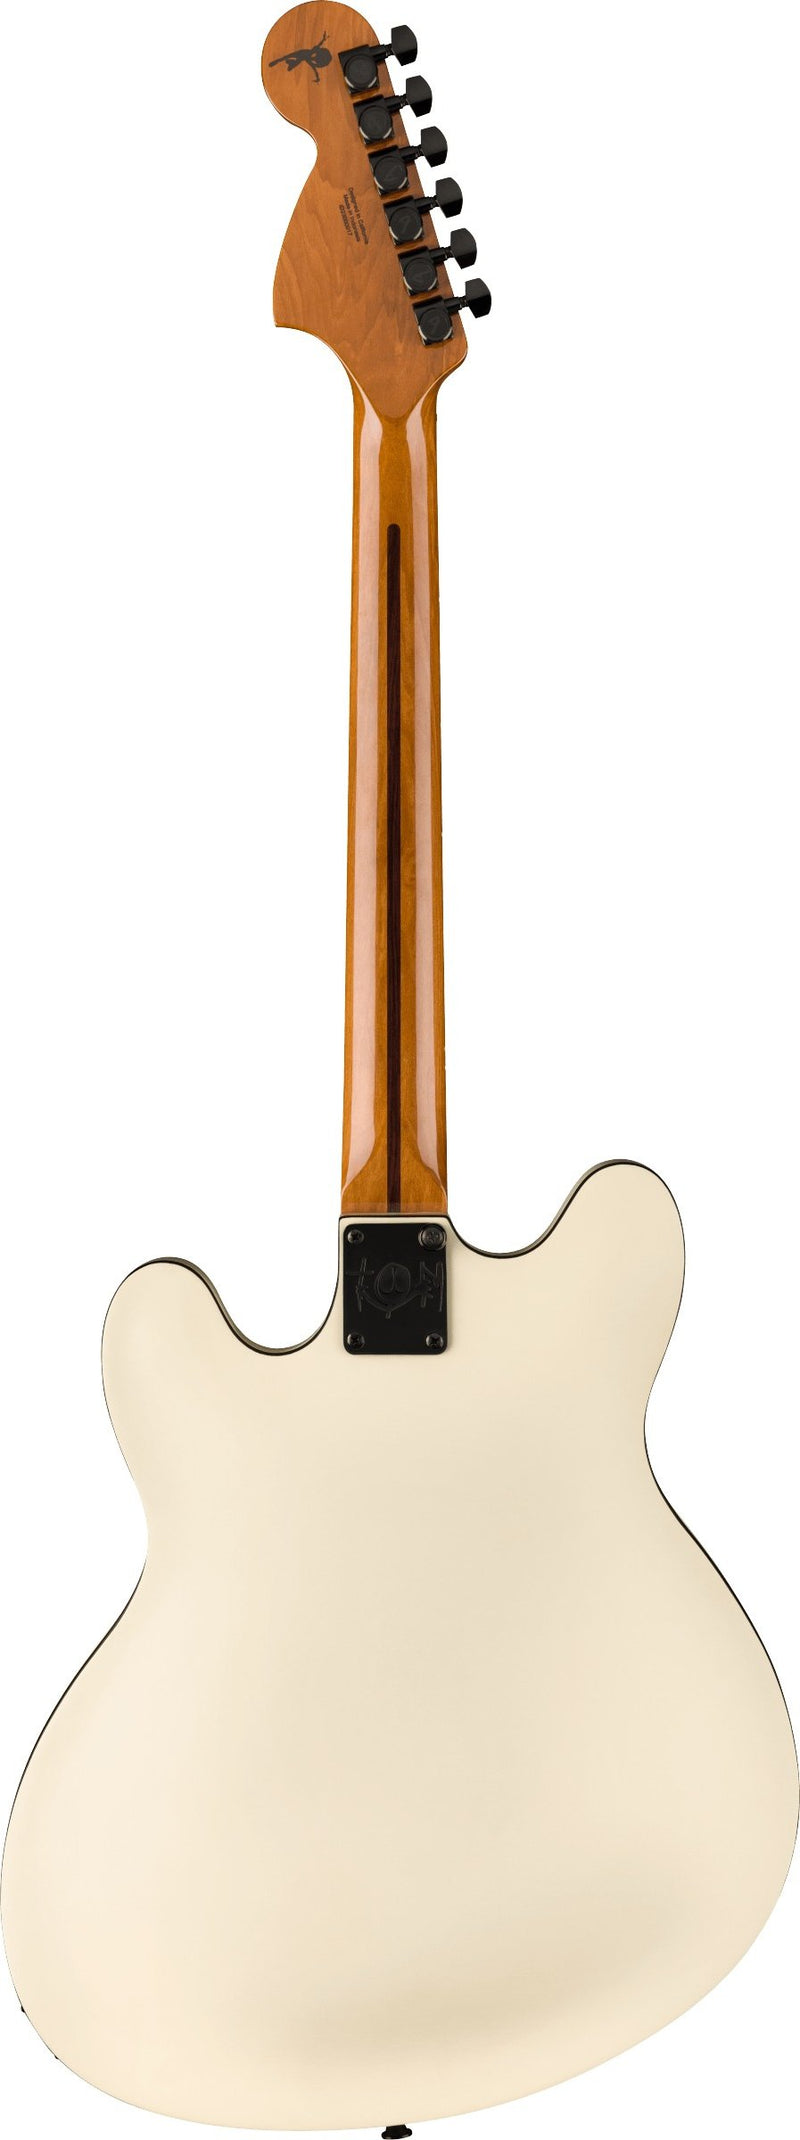 Fender Tom DeLonge Starcaster Semi-Hollowbody Electric Guitar Satin Olympic White